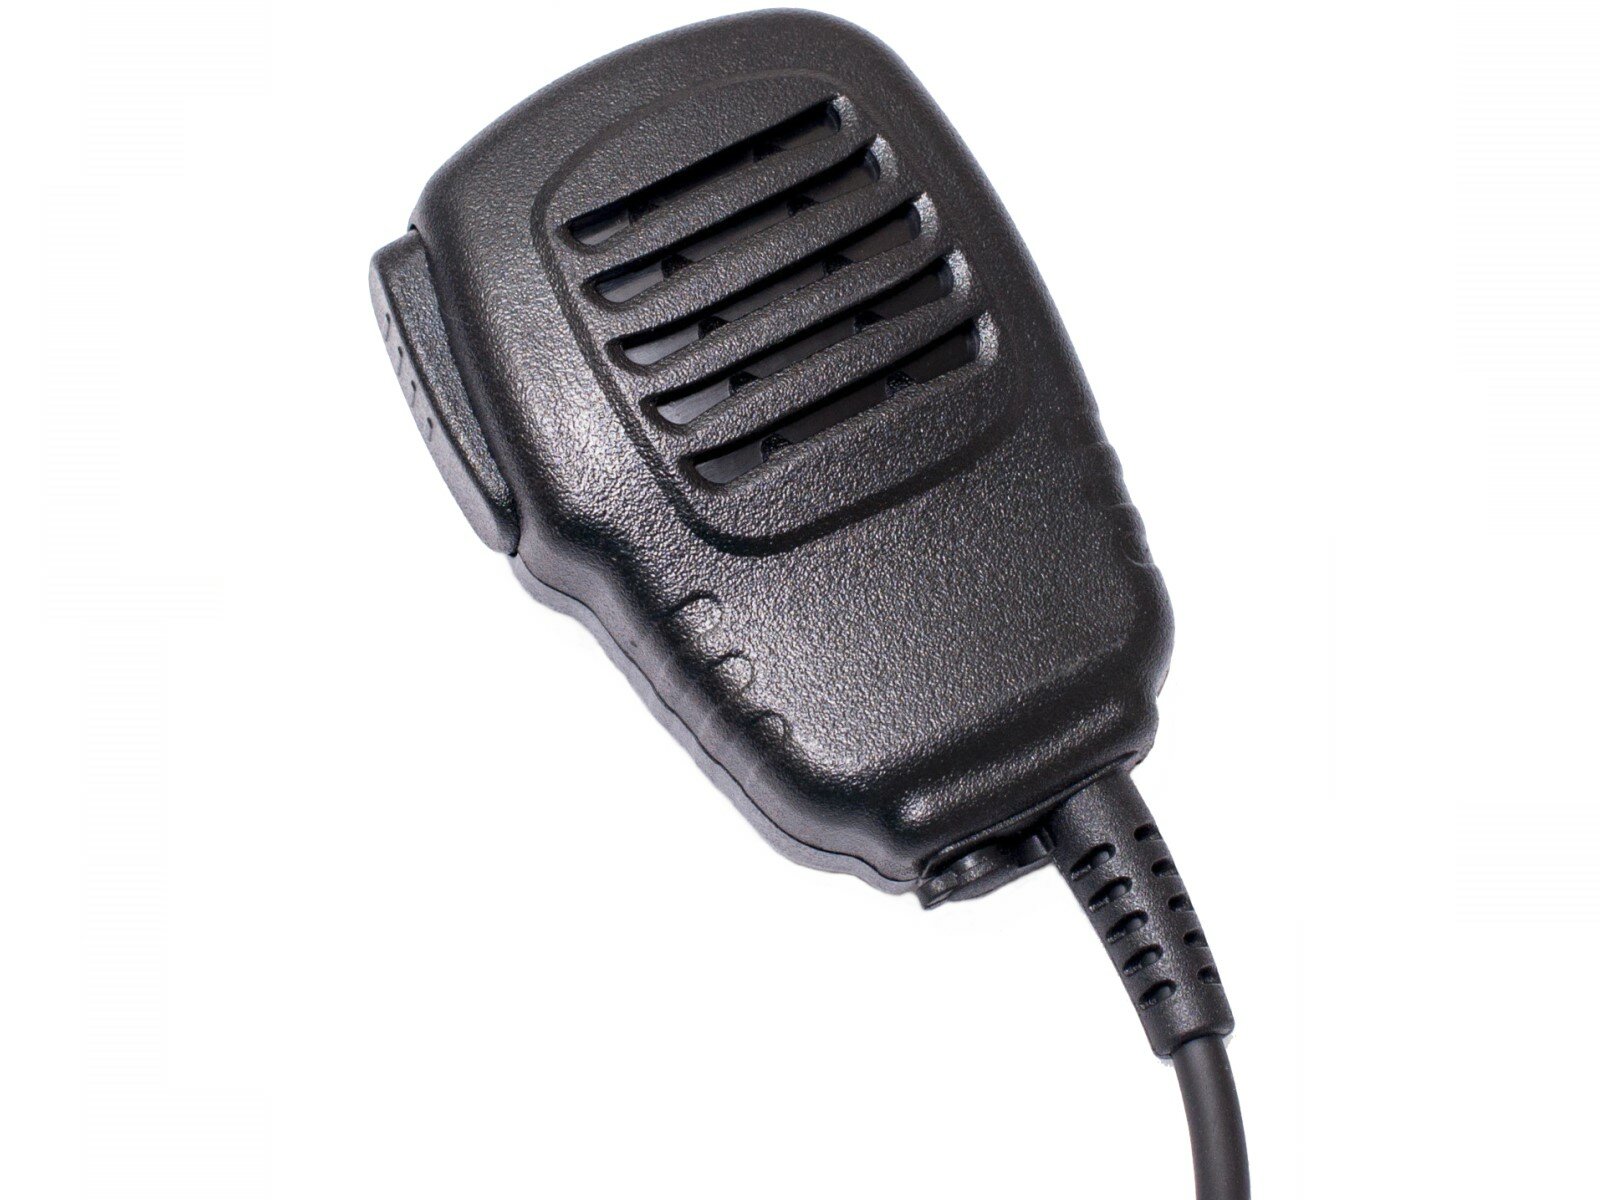 Lautsprechermikrofon leicht HM150-K2